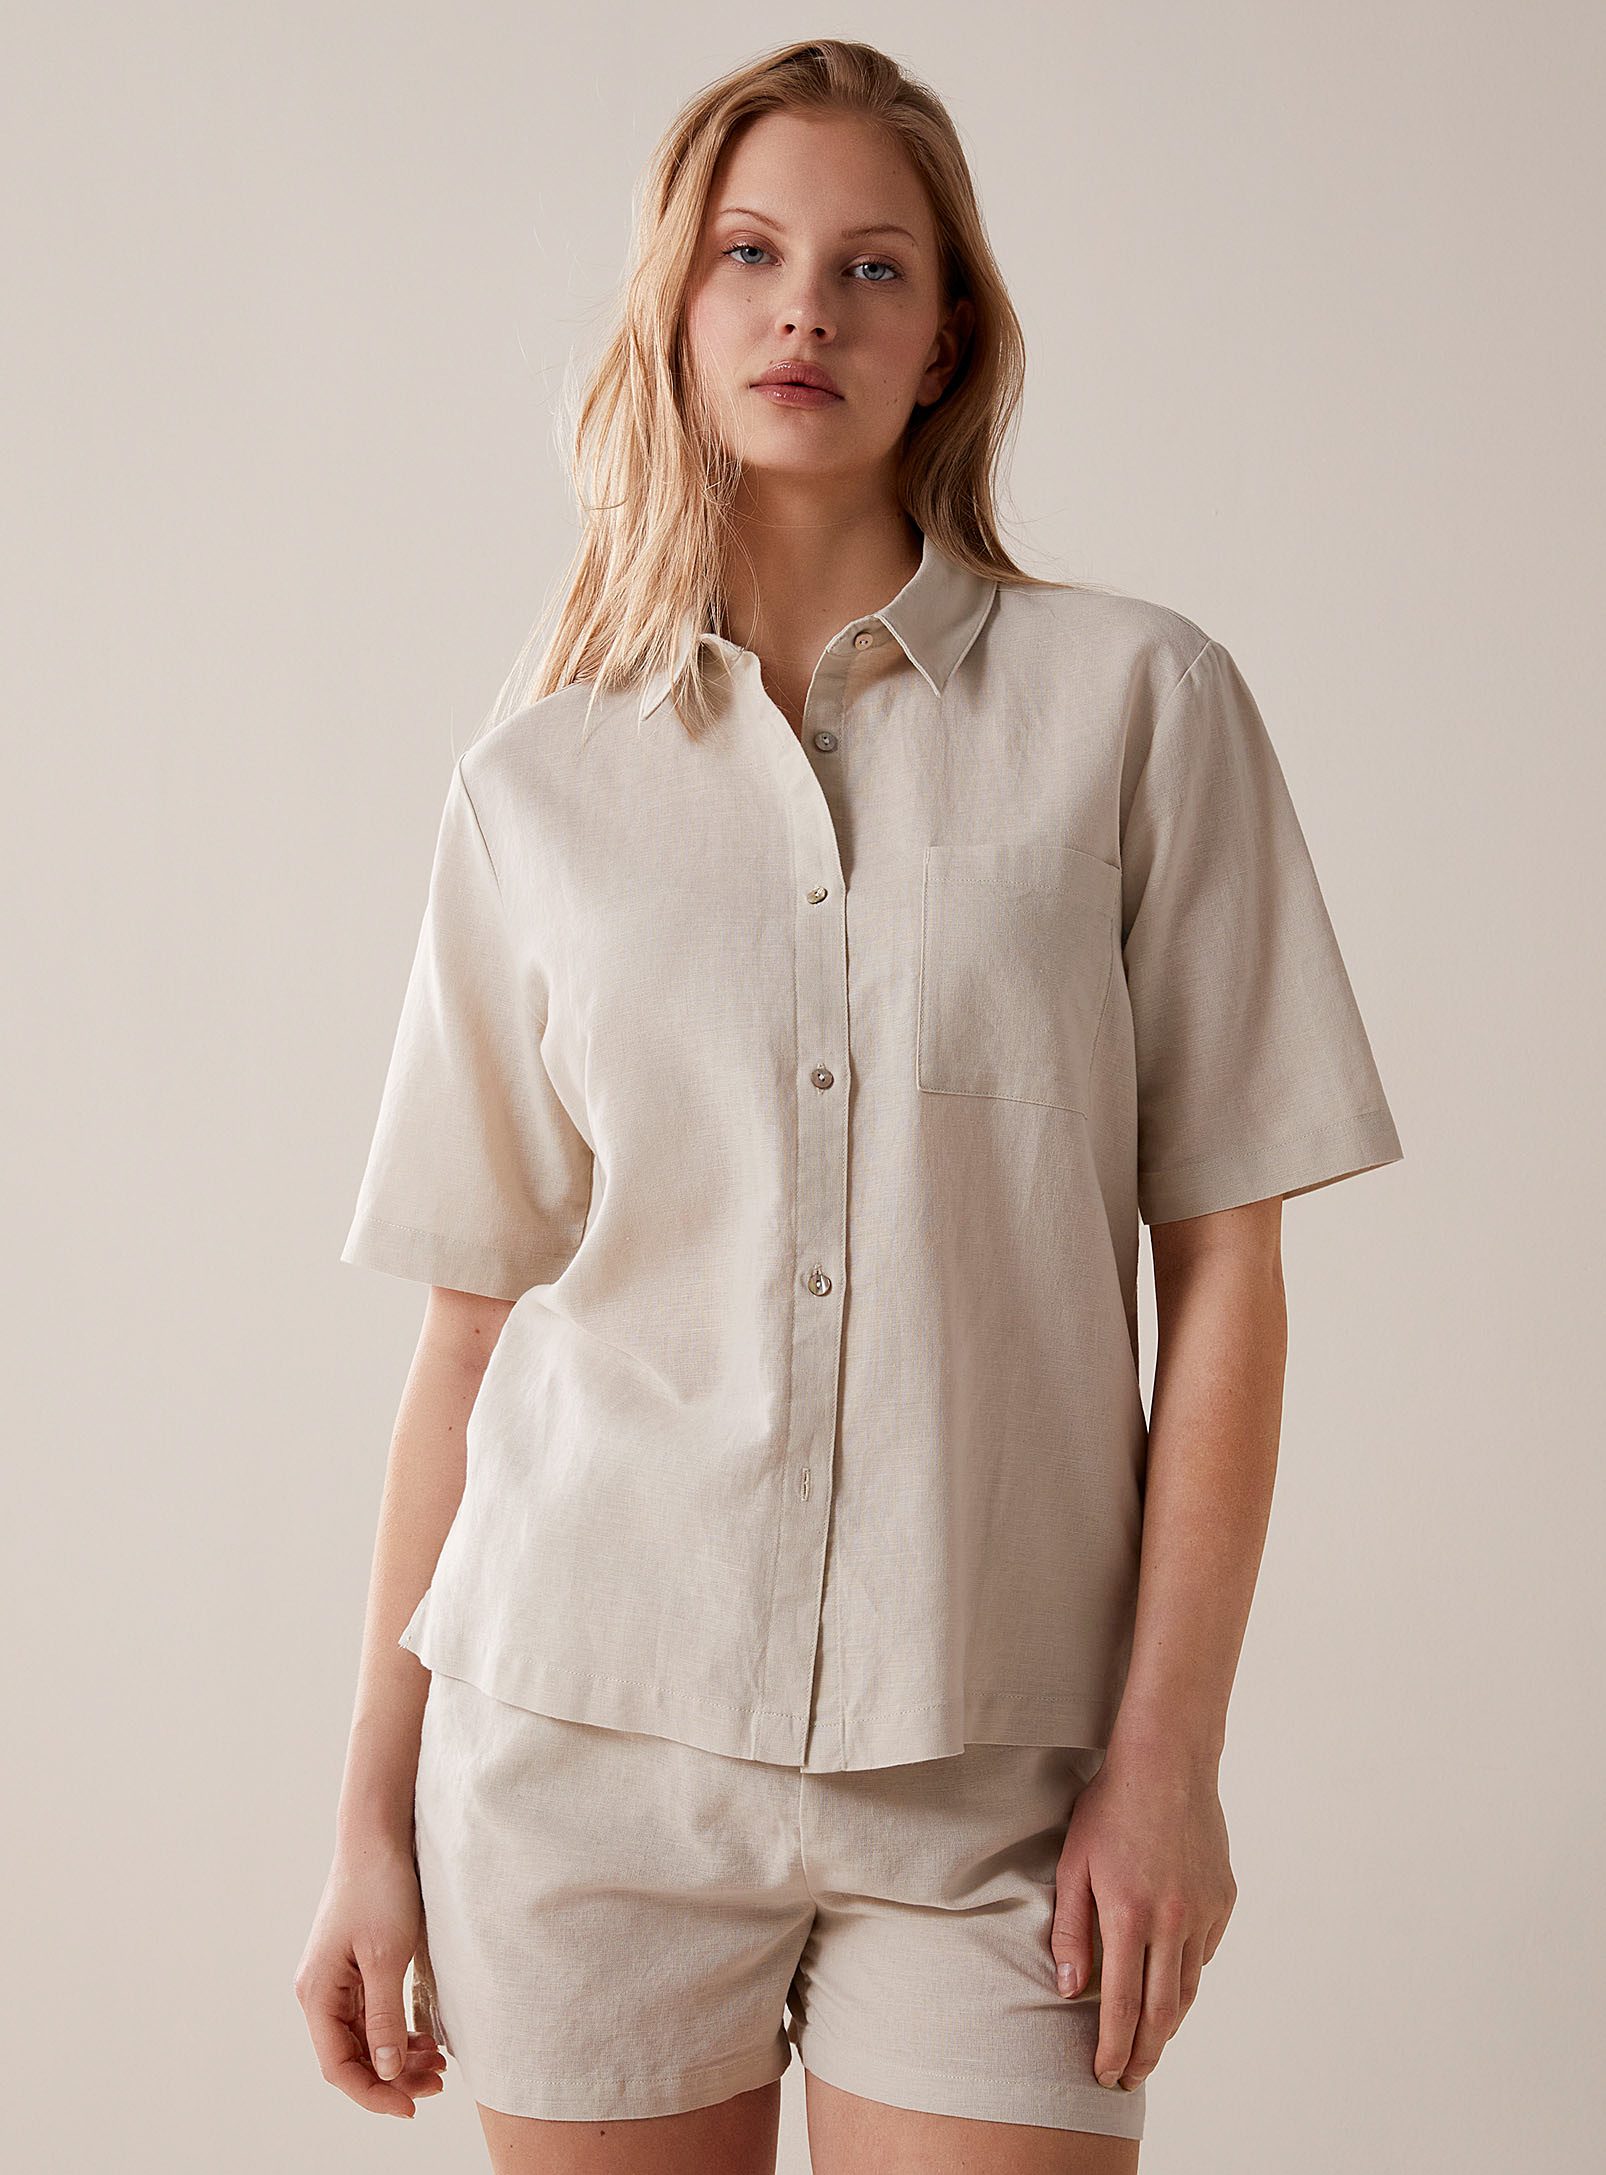 Miiyu Plain Linen And Cotton Lounge Shirt In Ivory/cream Beige